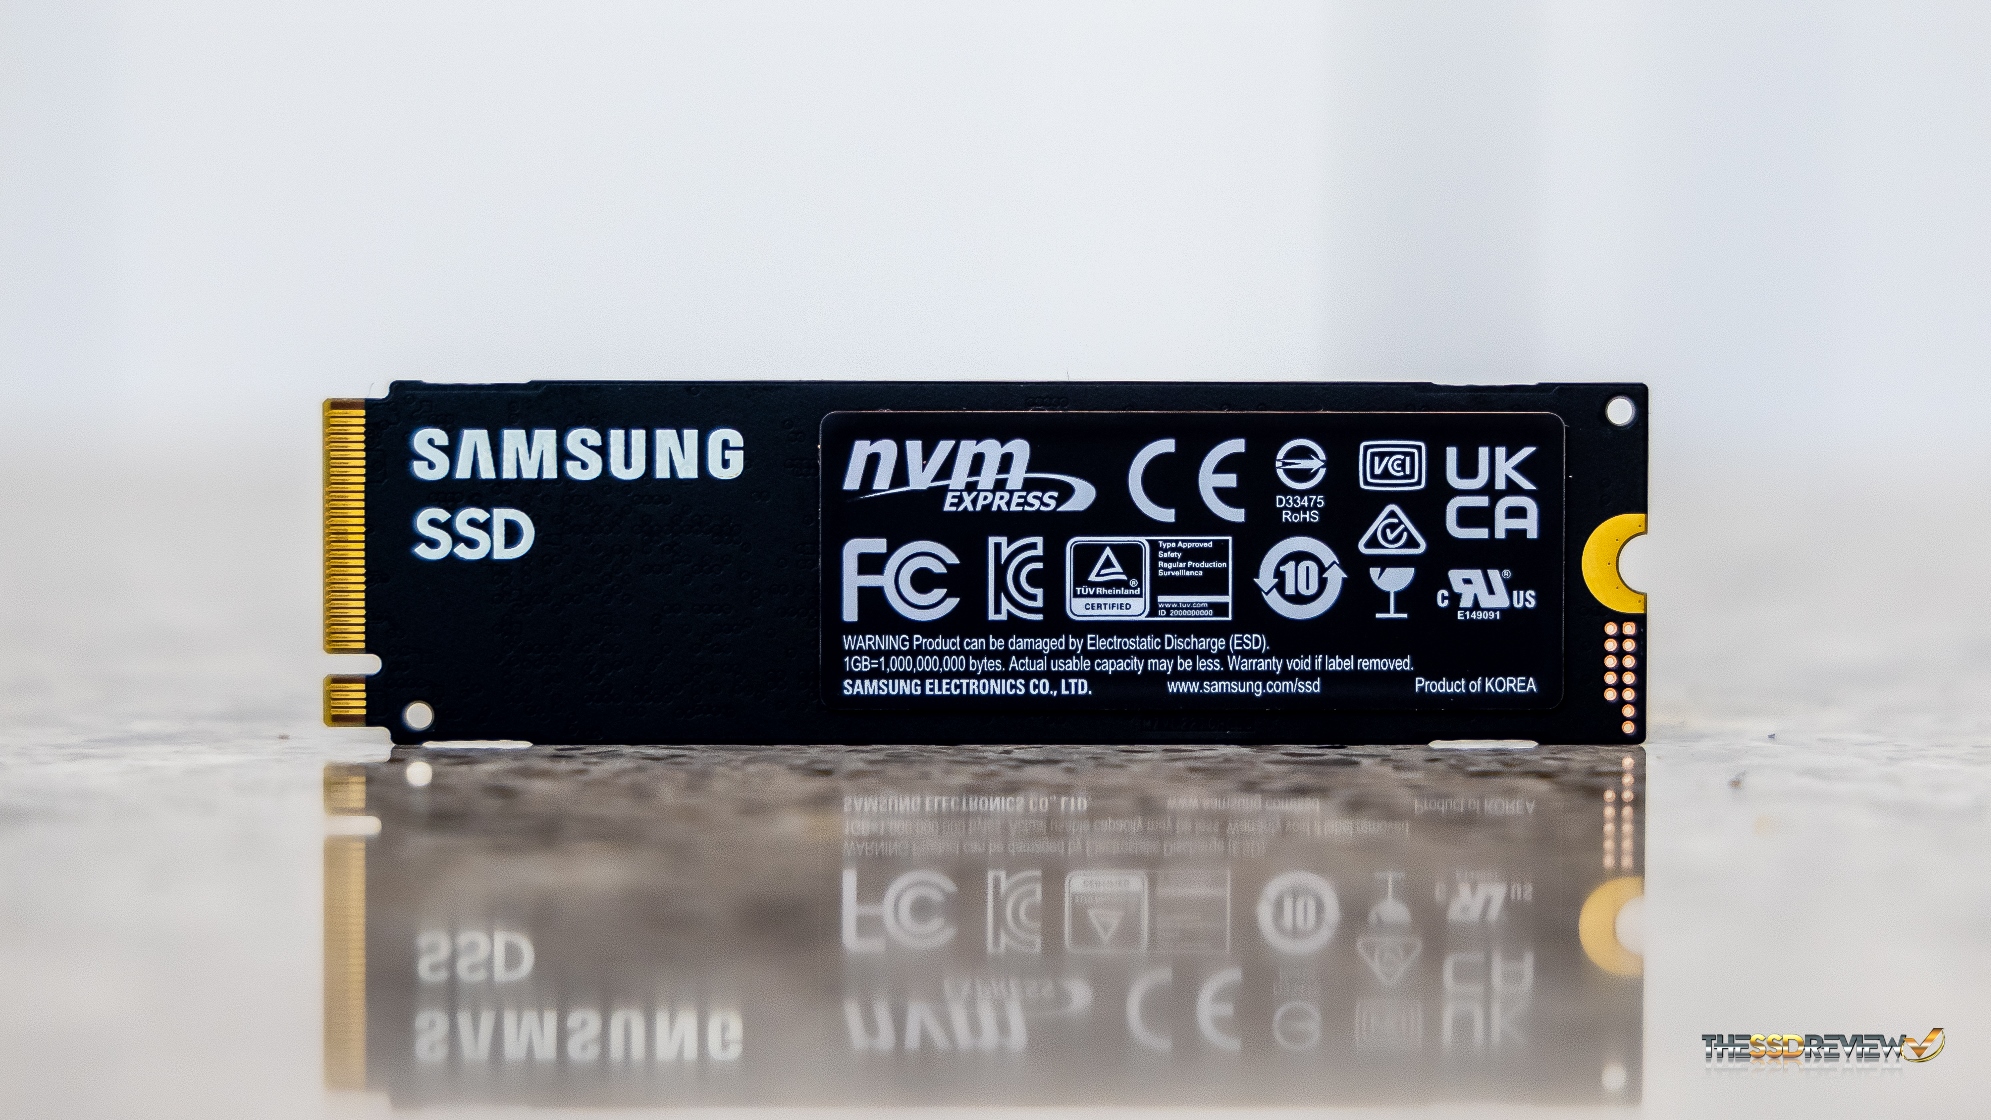 Samsung 980 PRO Review - Samsung's First PCIe Gen4 SSD 